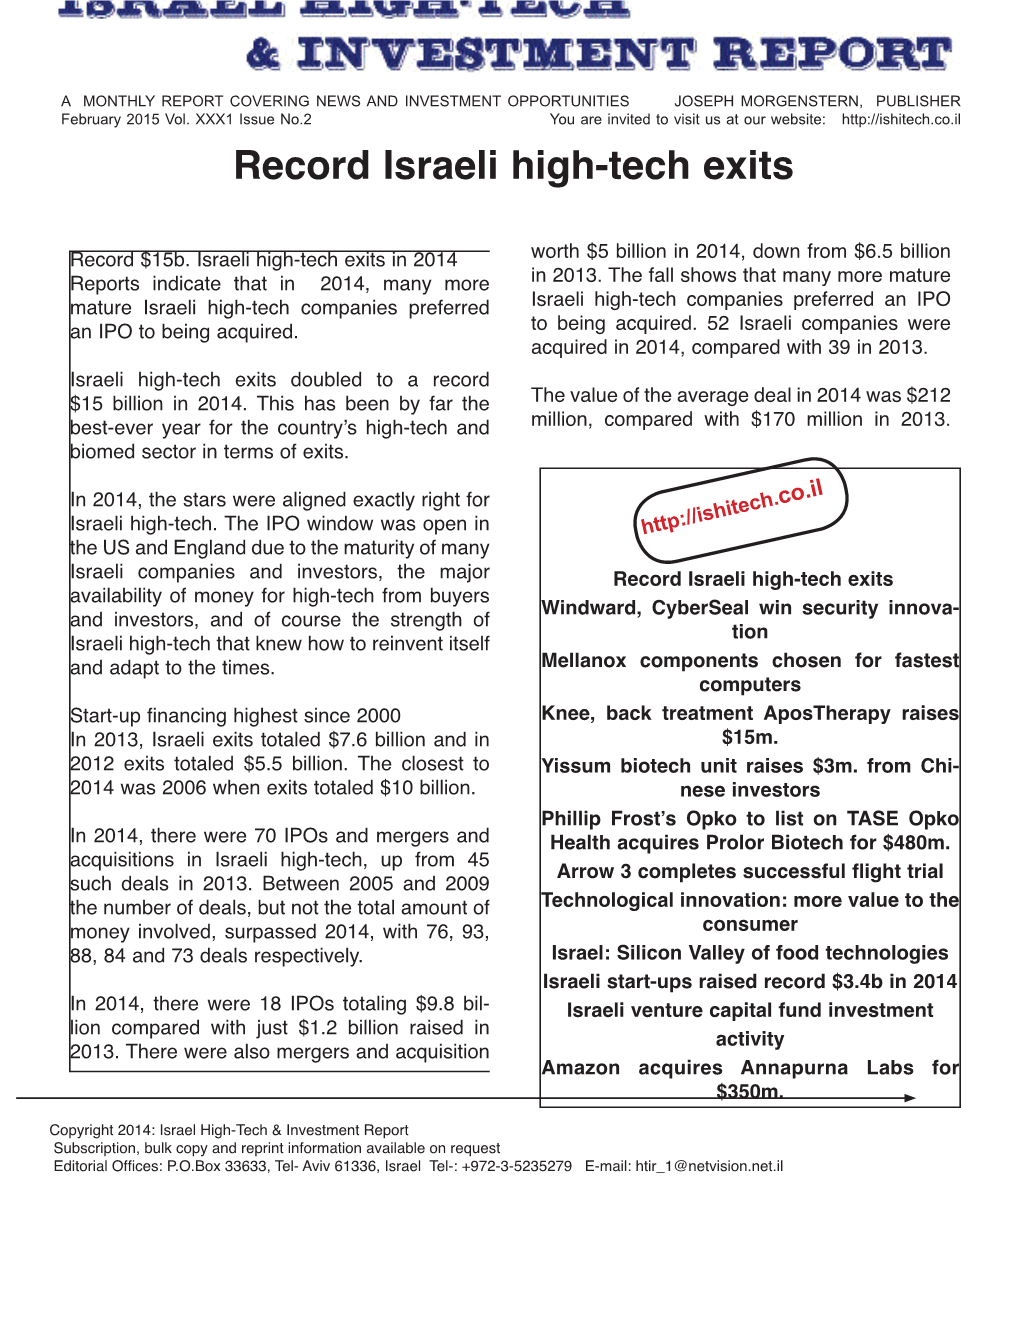 Record Israeli High-Tech Exits